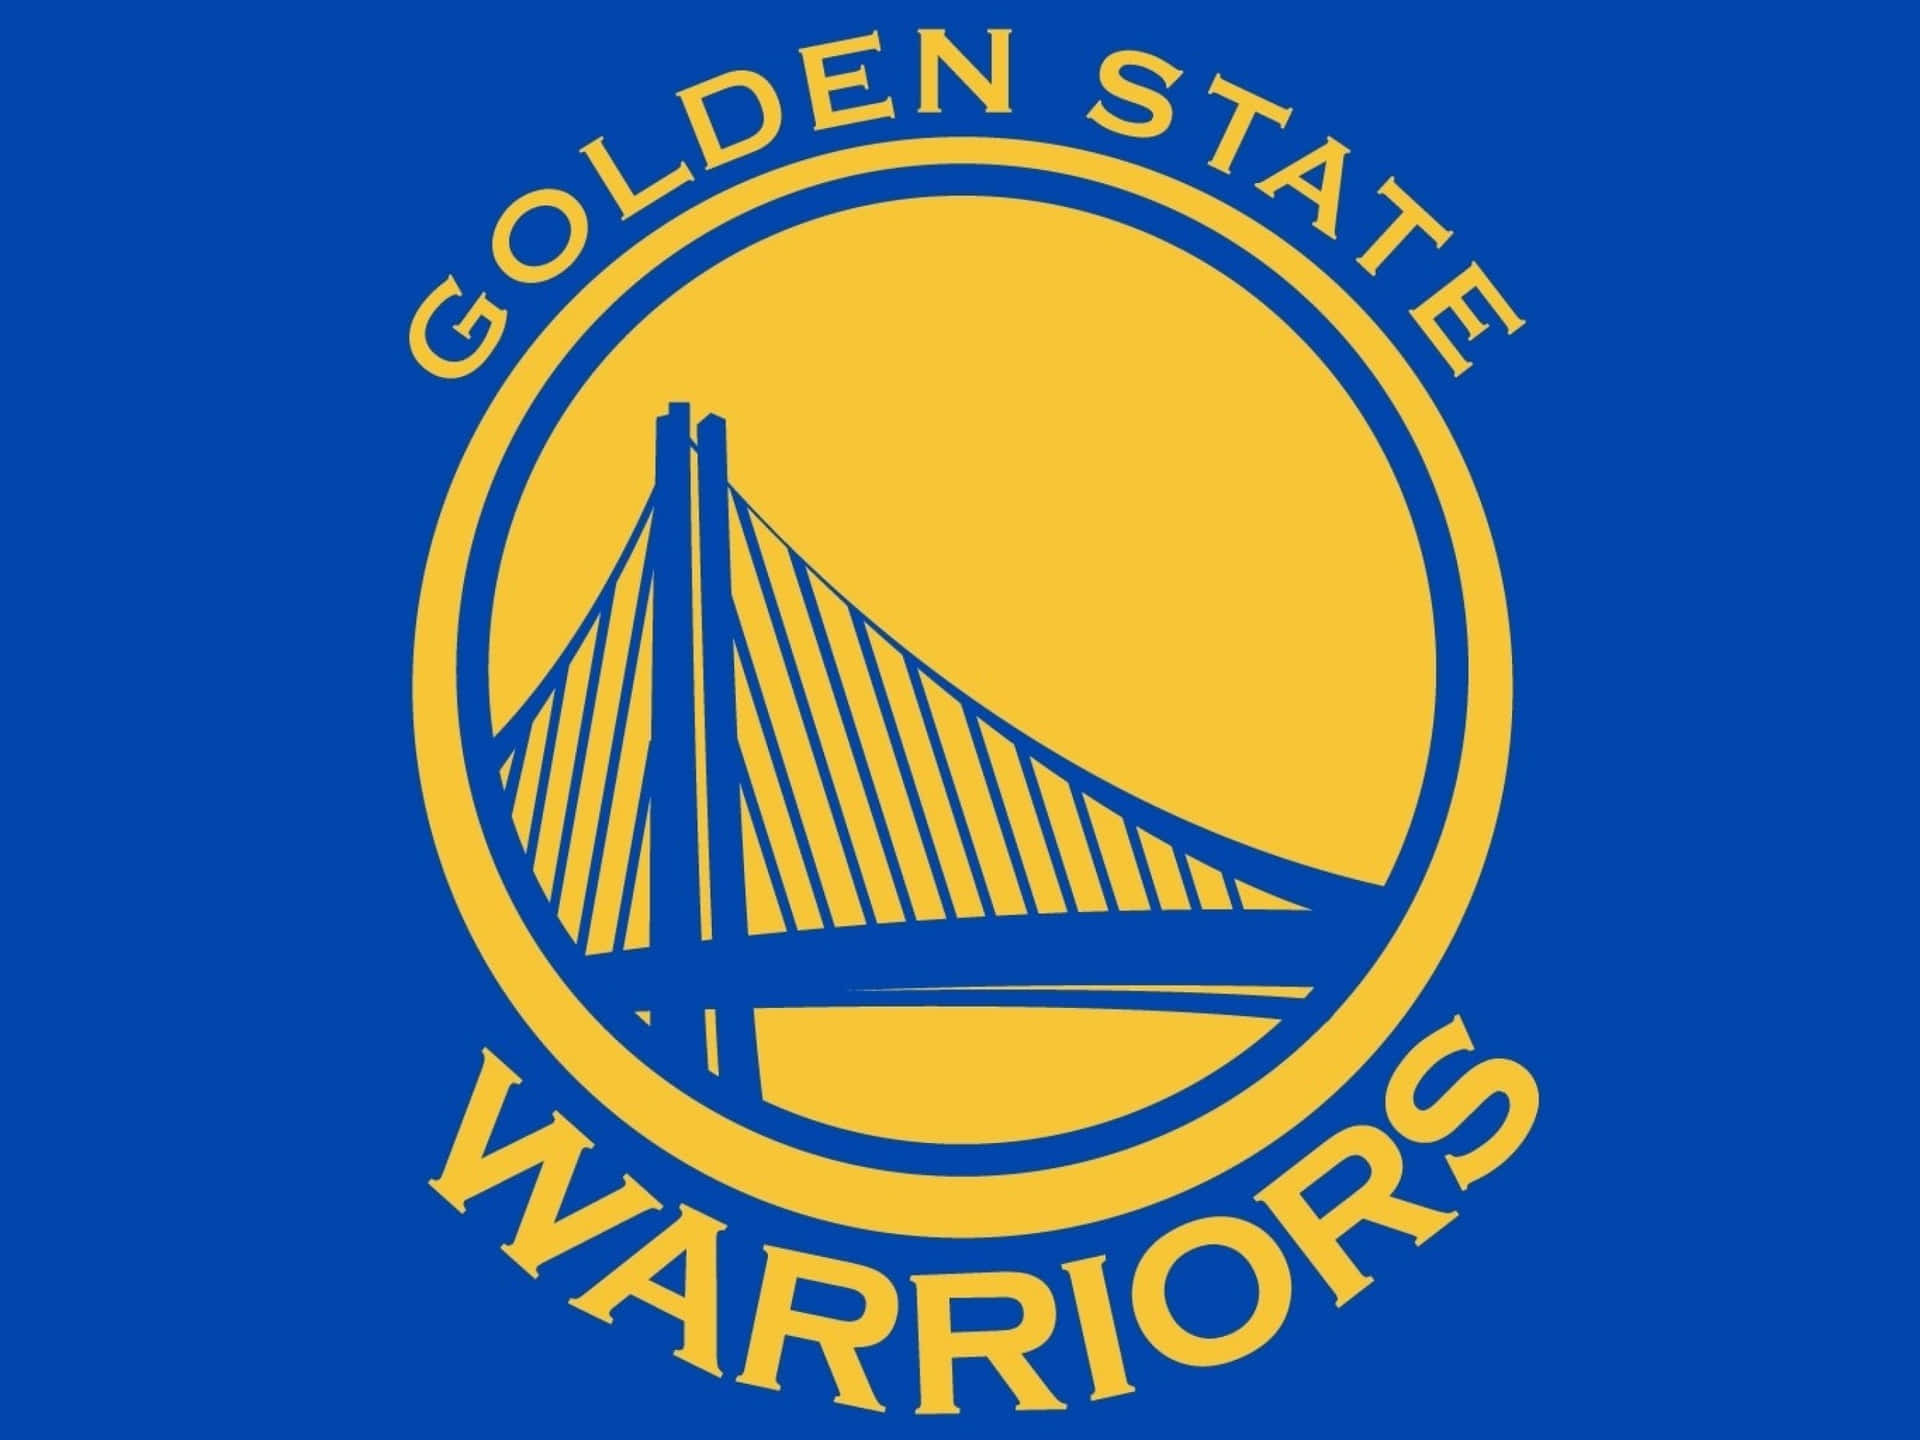 100+] Golden State Warriors Logo Wallpapers